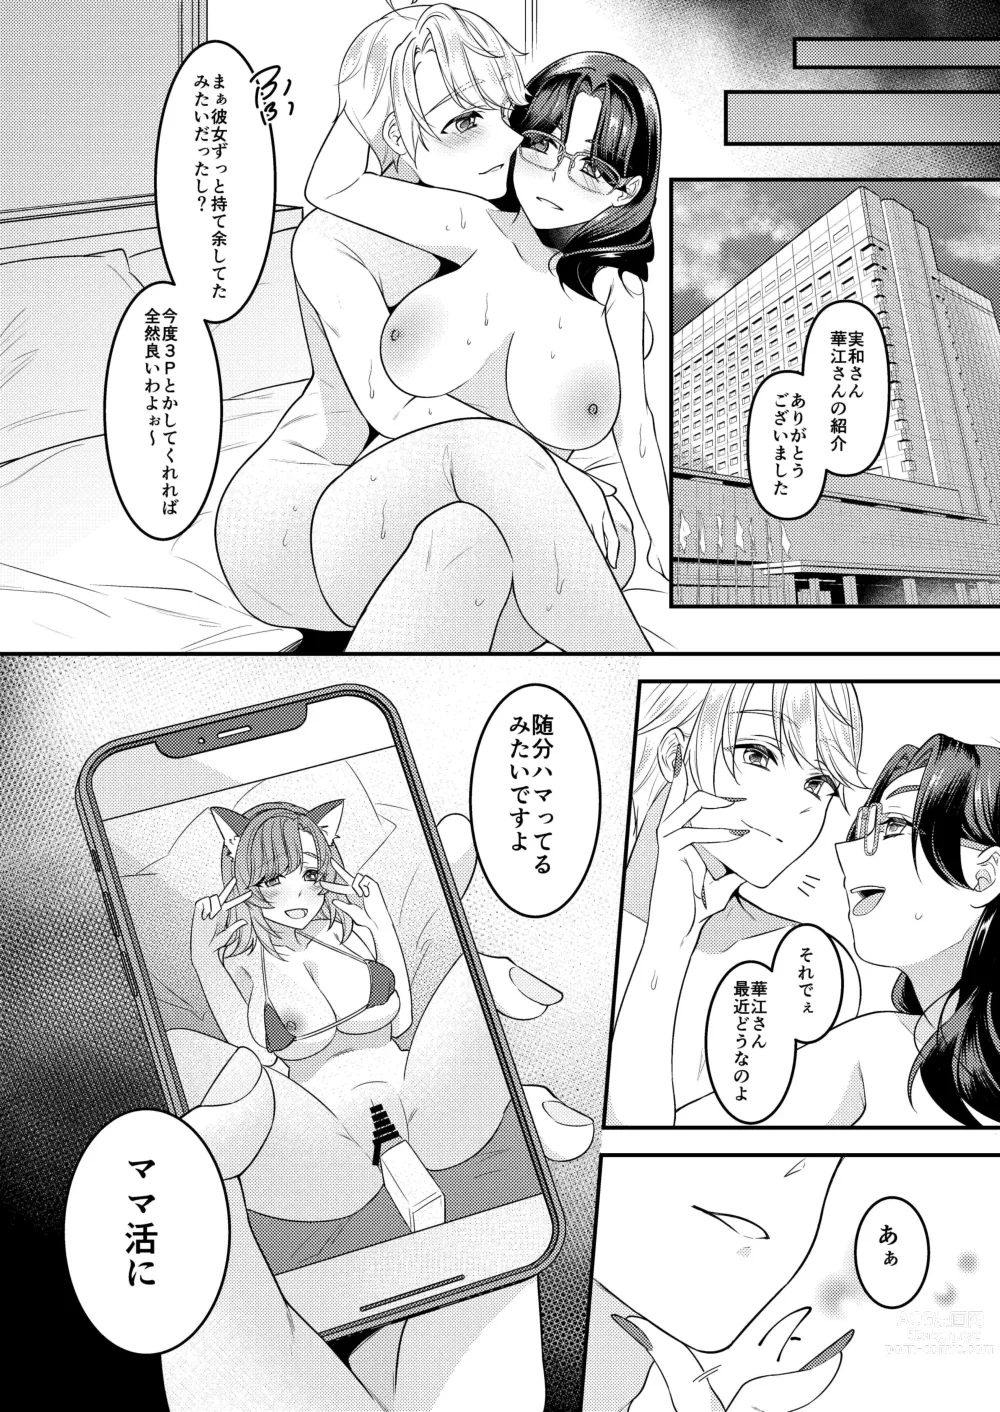 Page 25 of doujinshi Okaa-san, Mamakatsu ni Hamattemasu - Im addicted to feeling good with young guys.